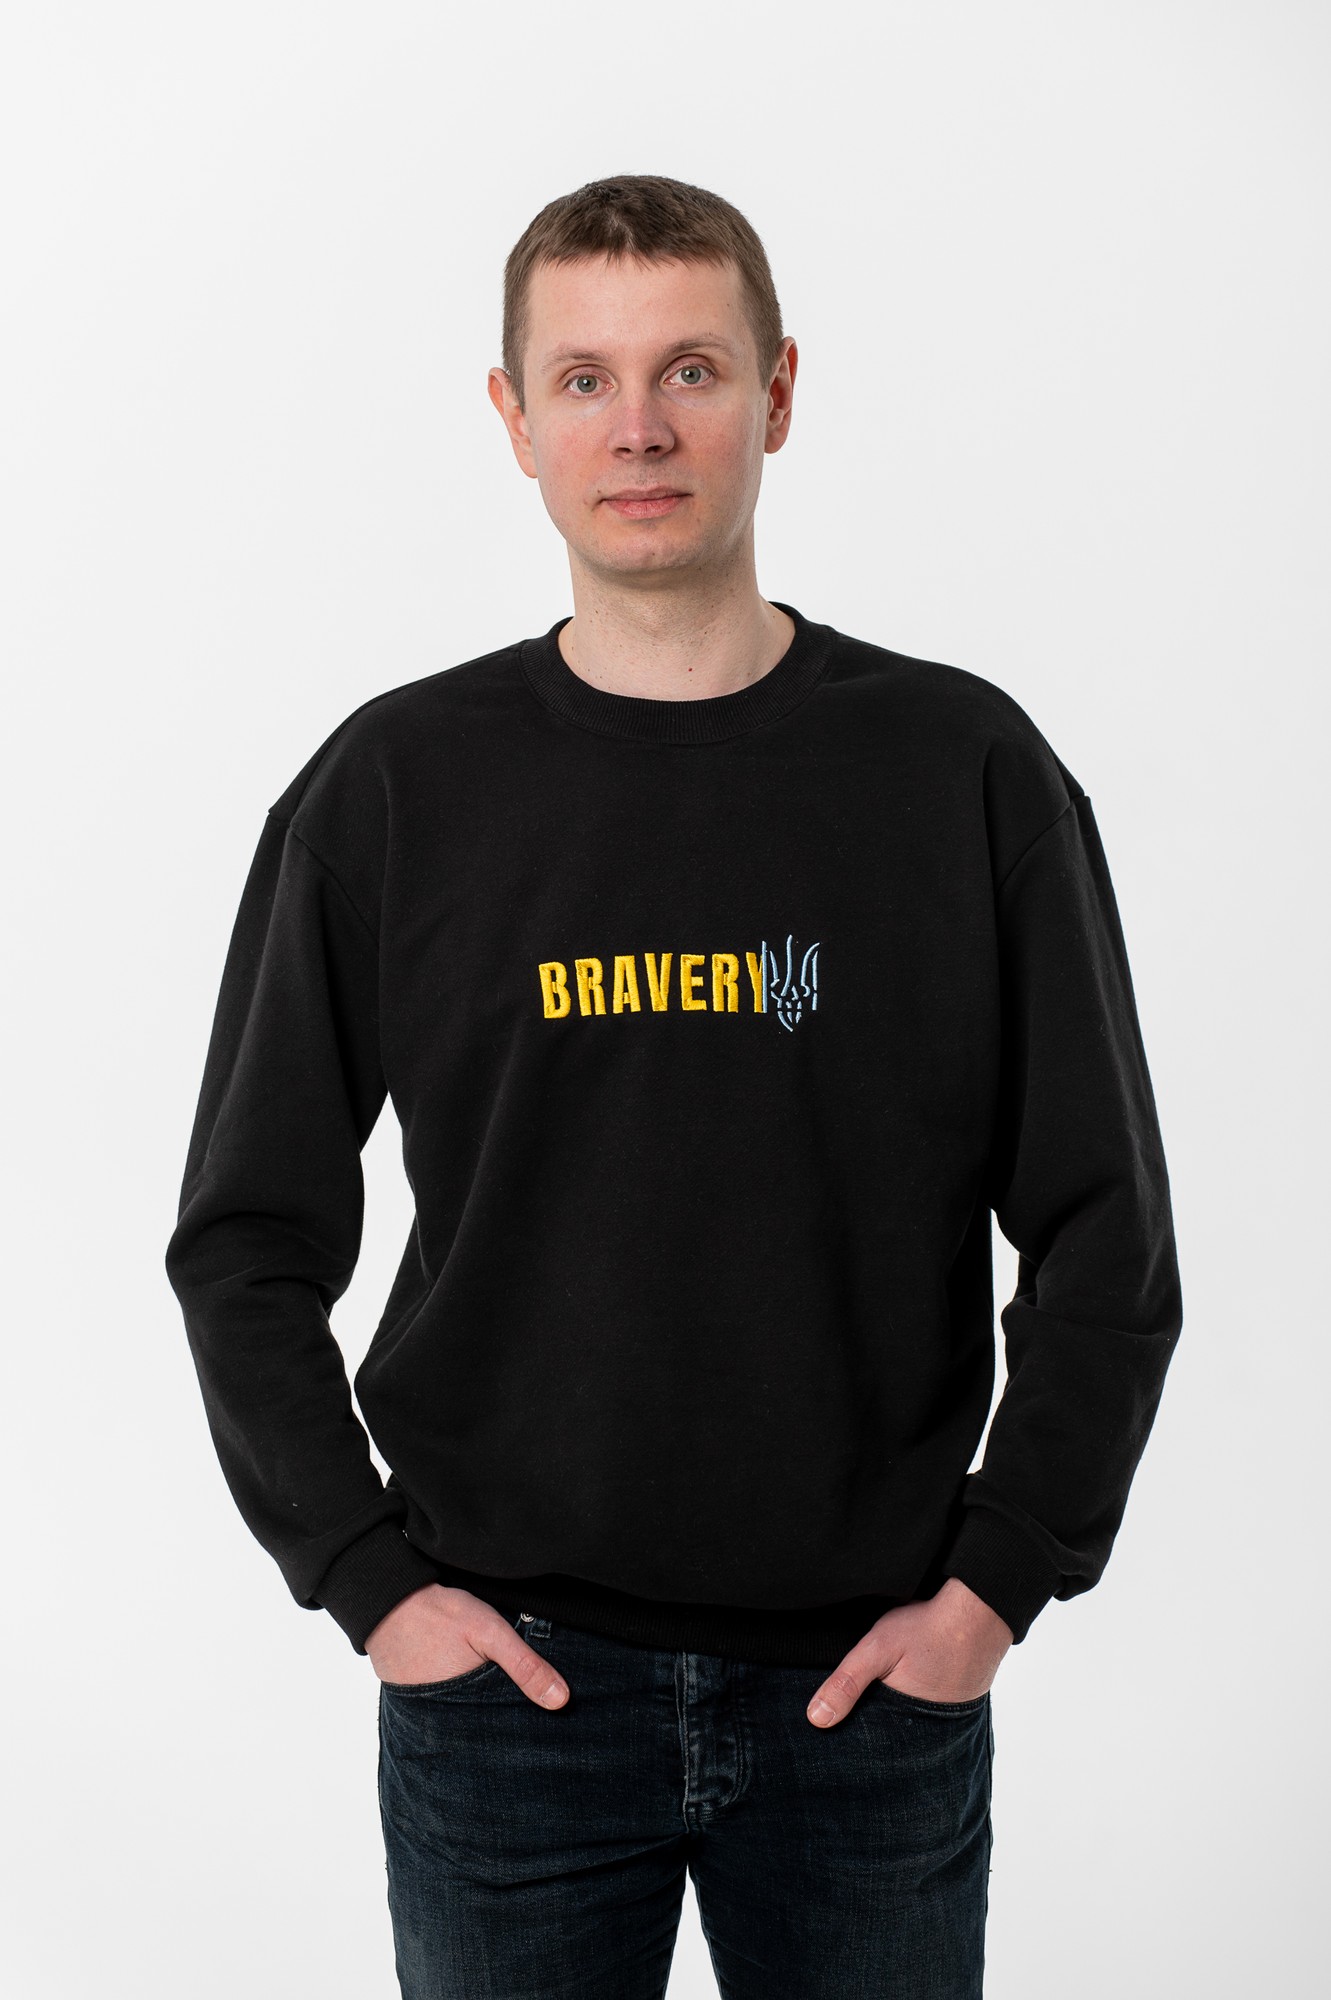 Men's sweatshirt with embroidery "BRAVERY" black